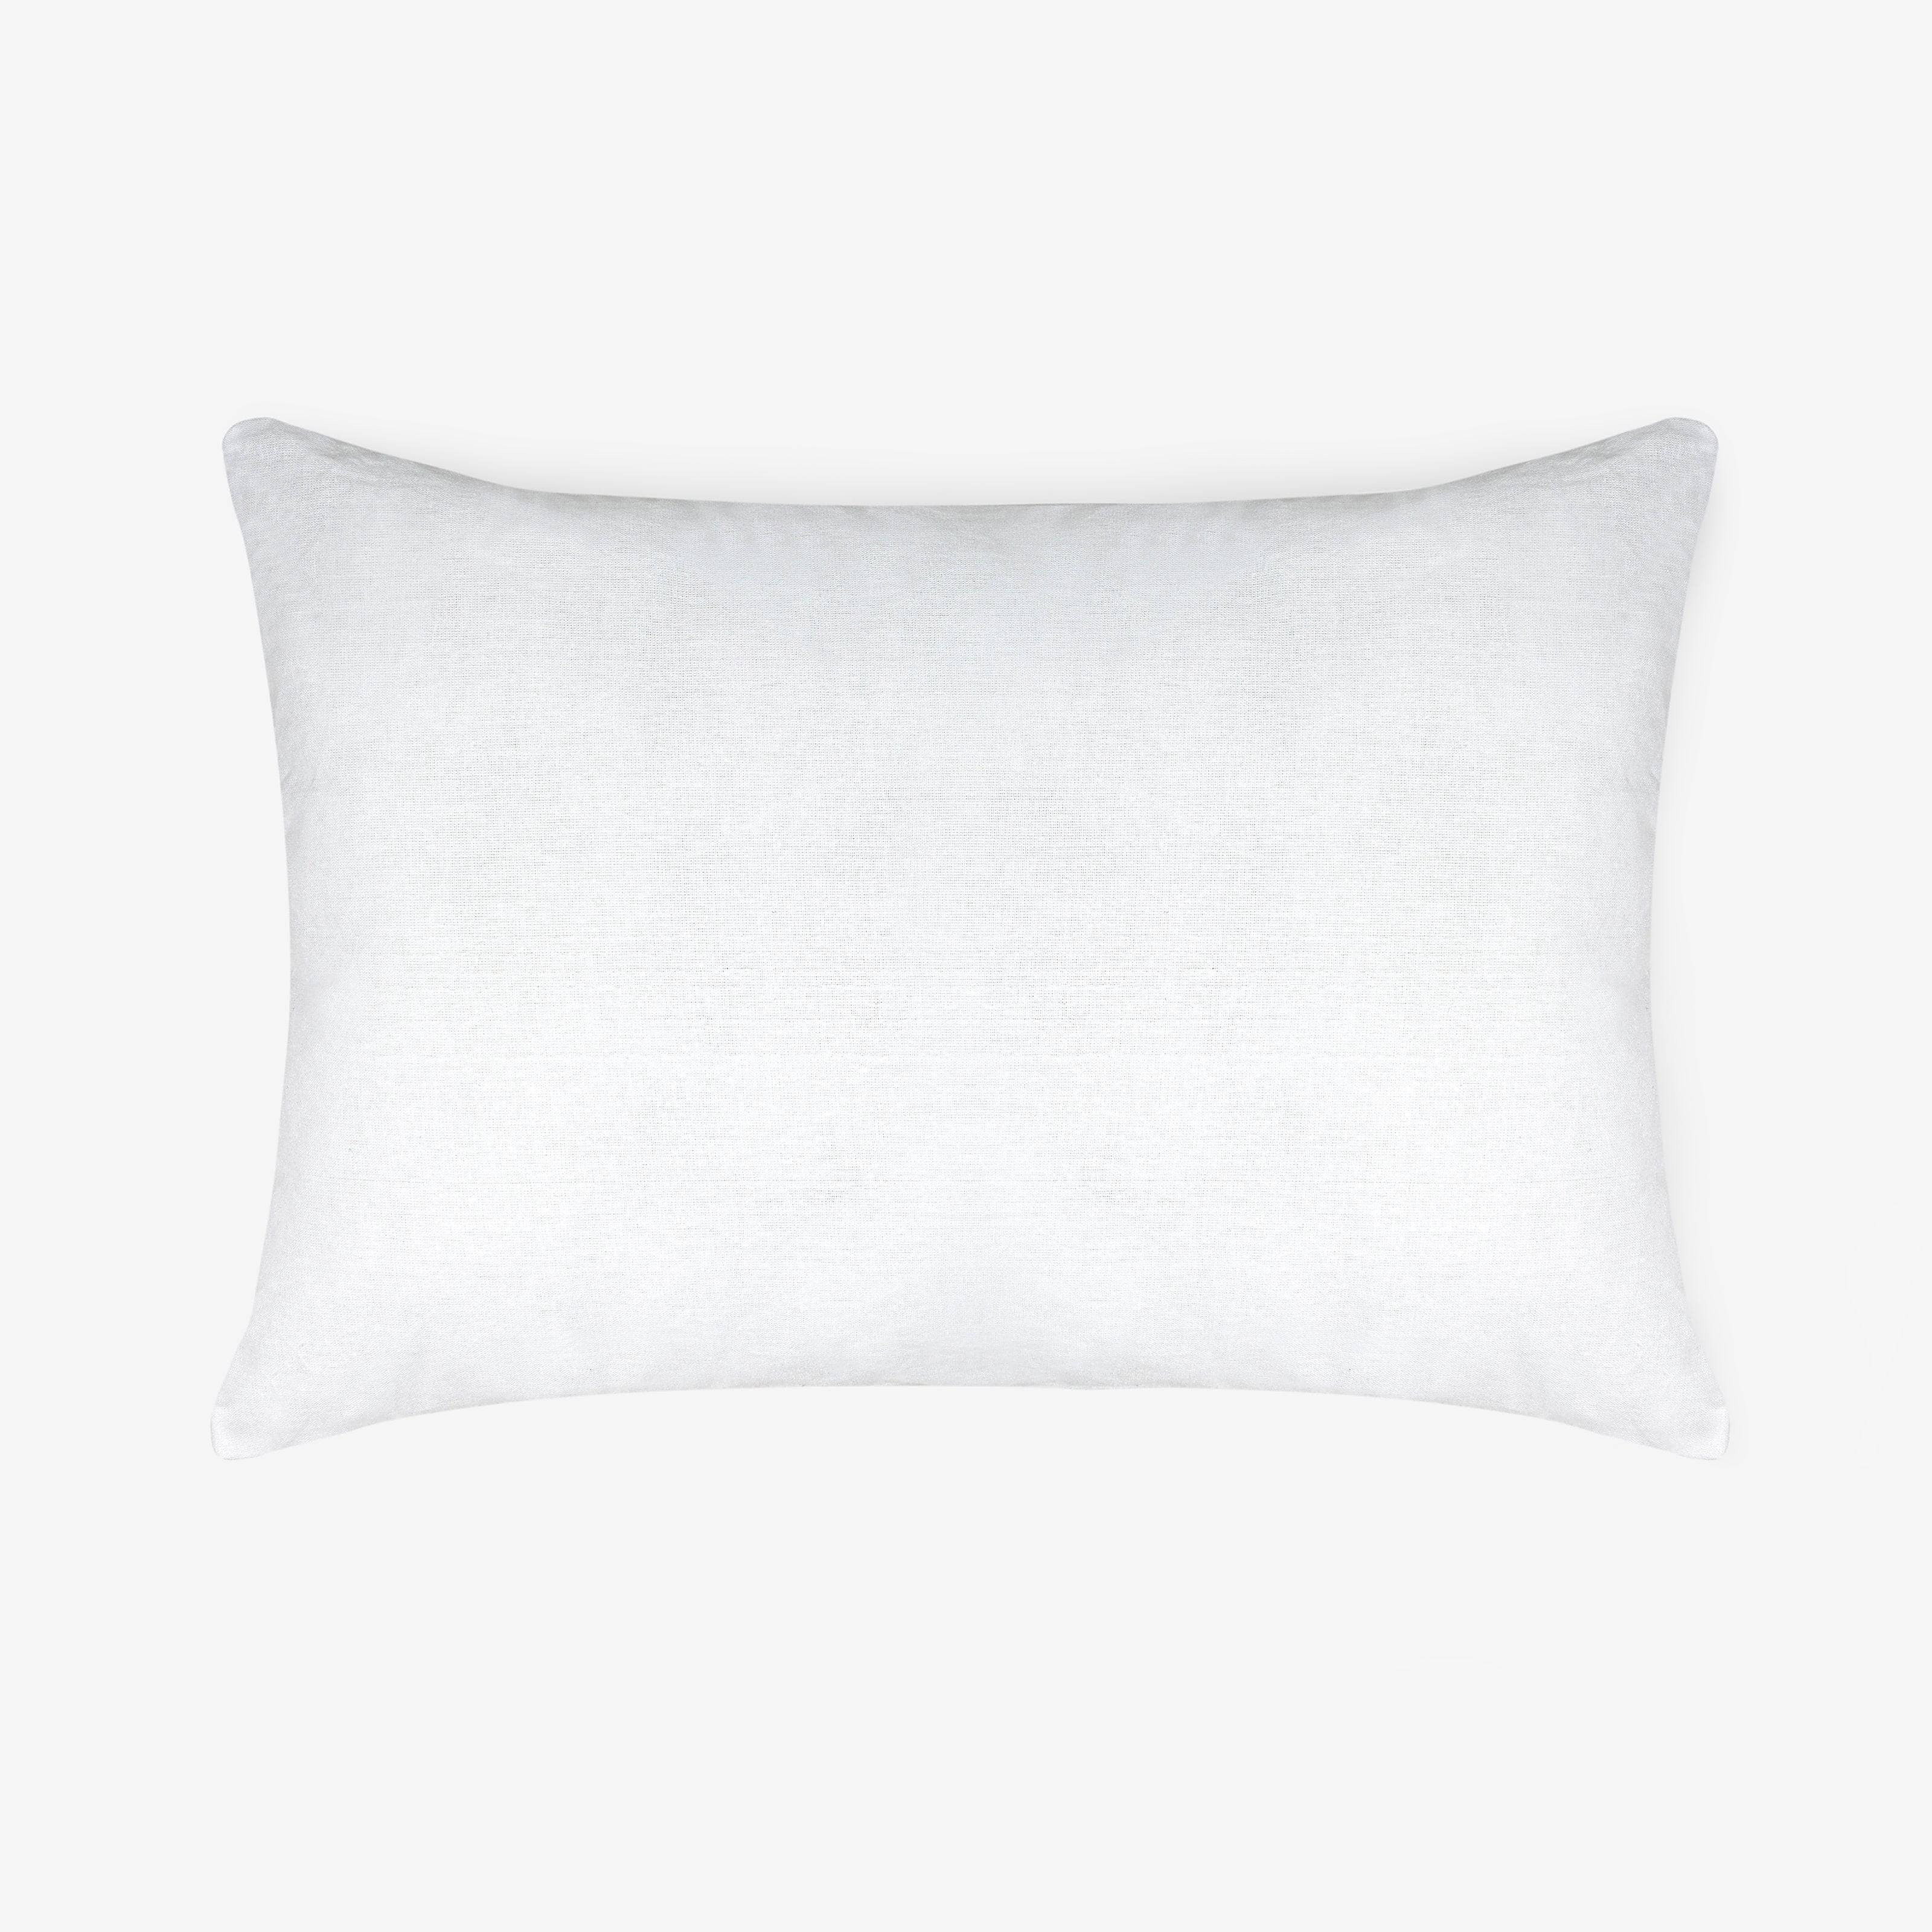 Small Rectangular Cotton Cushion Pad, White, 35x50 cm